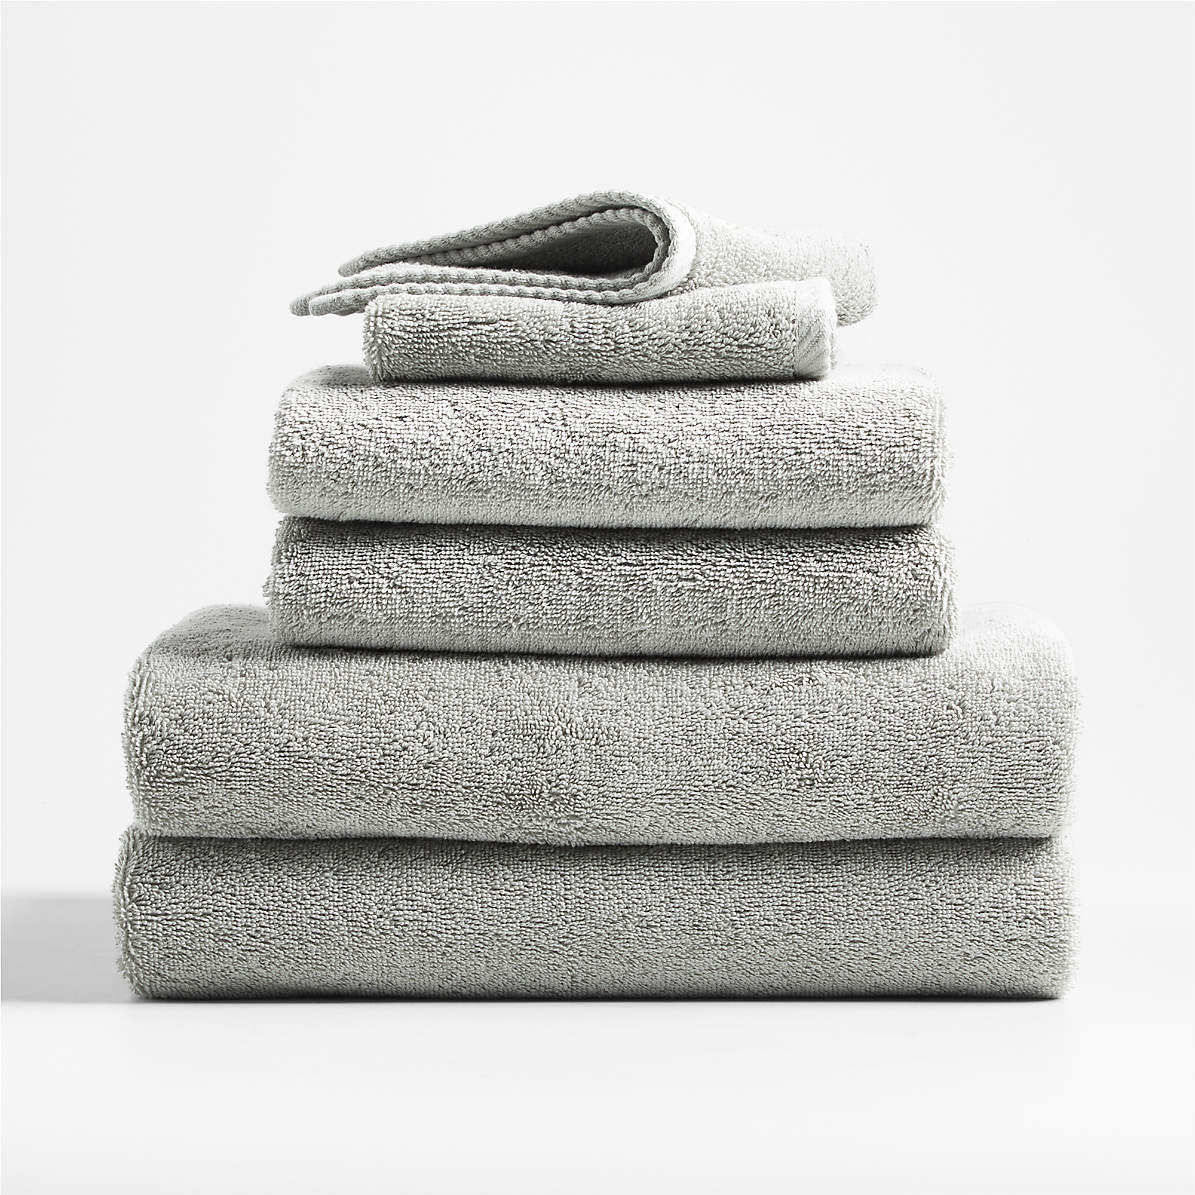 https://cb.scene7.com/is/image/Crate/OrganicQuickDryTowelsAshS6SSF22/$web_pdp_main_carousel_zoom_med$/220712150111/quick-dry-organic-cotton-ash-gray-bath-towels-set-of-6.jpg